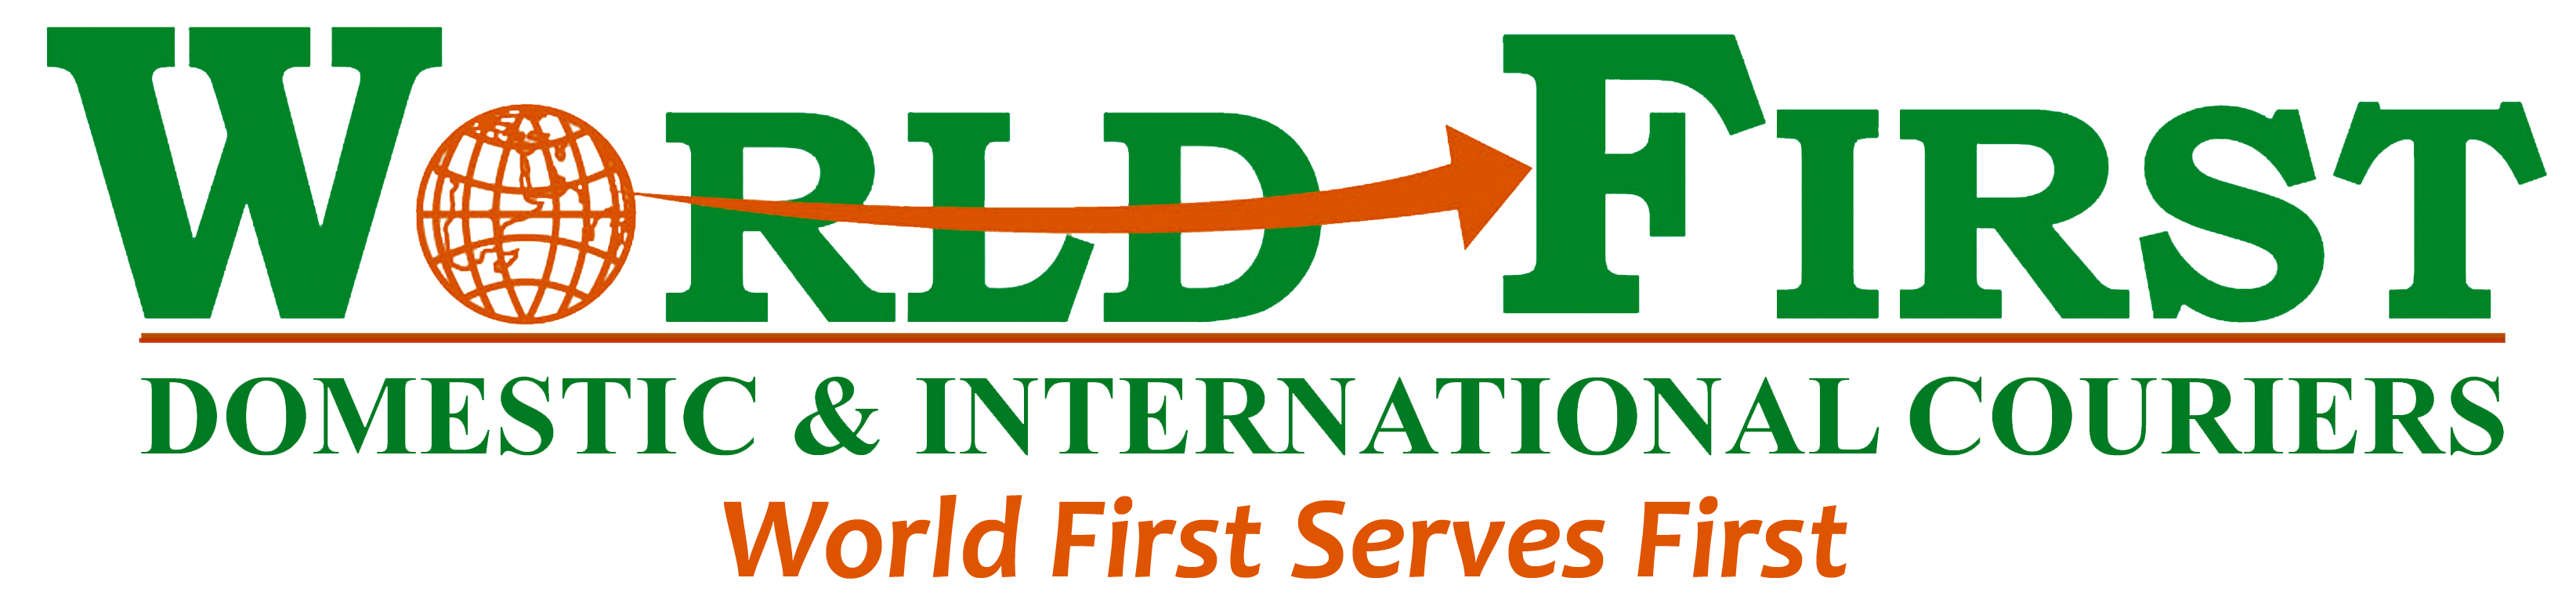 World First International Couriers - Logo